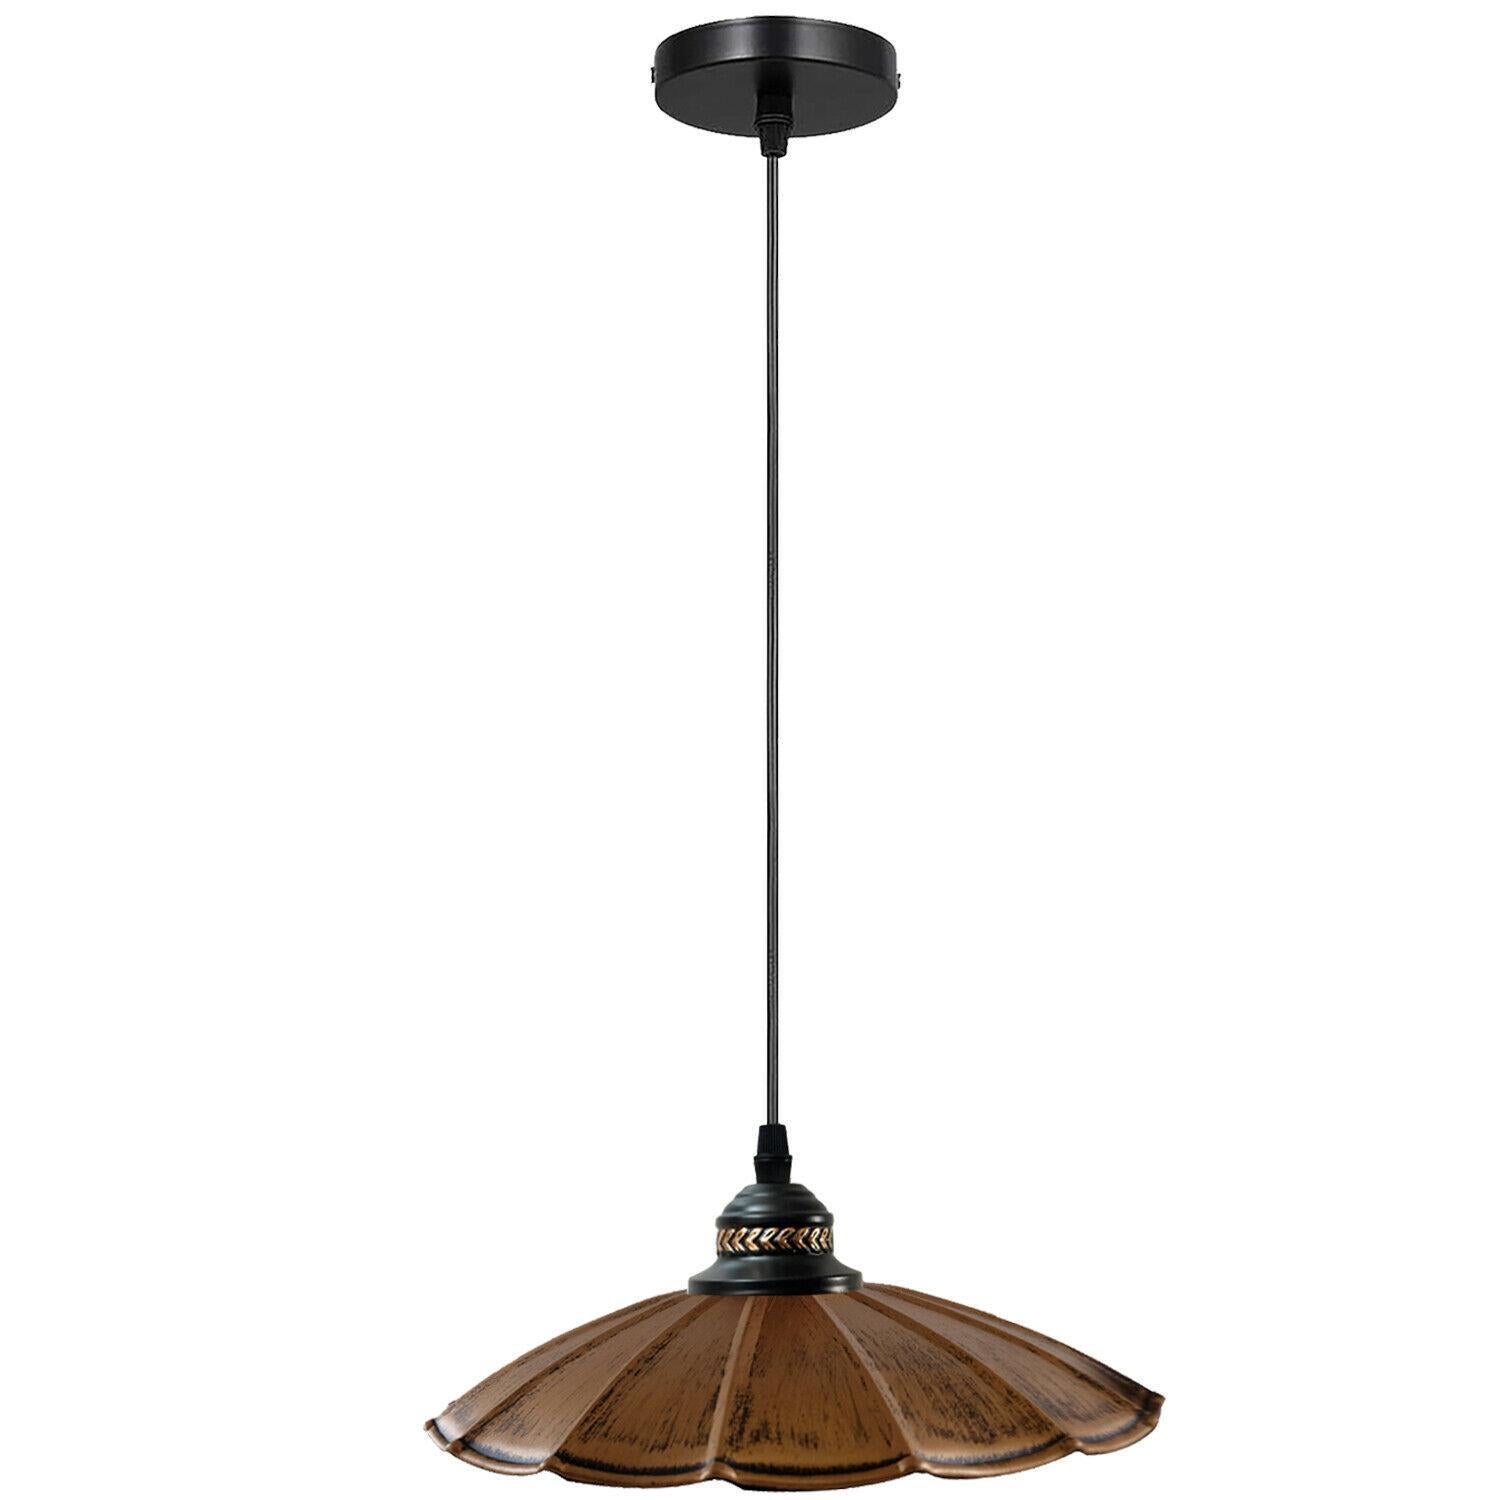 Wavy Shade Retro Style Metal Vintage Ceiling Pendant Lamp Light Modern Lighting Industrial Design~1411 - LEDSone UK Ltd